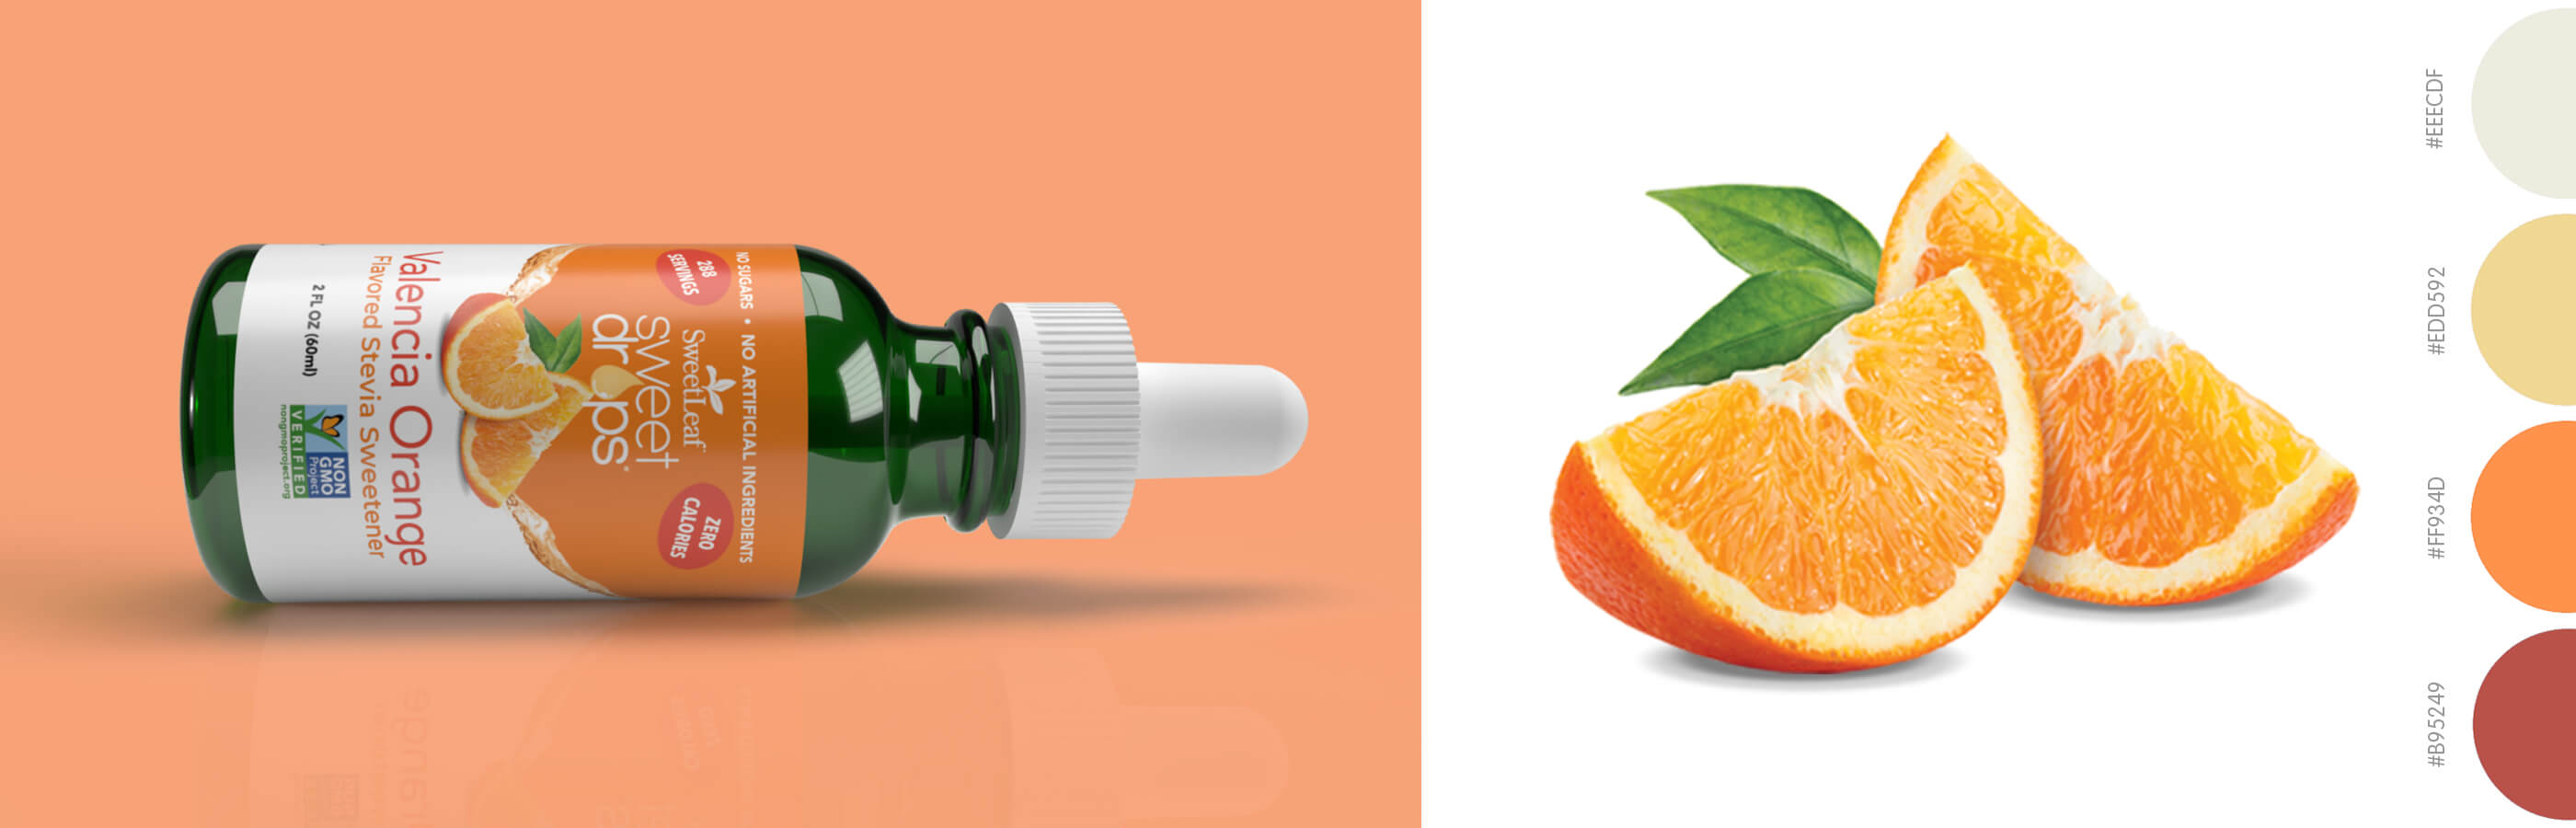 sweet drops valencia orange package design image